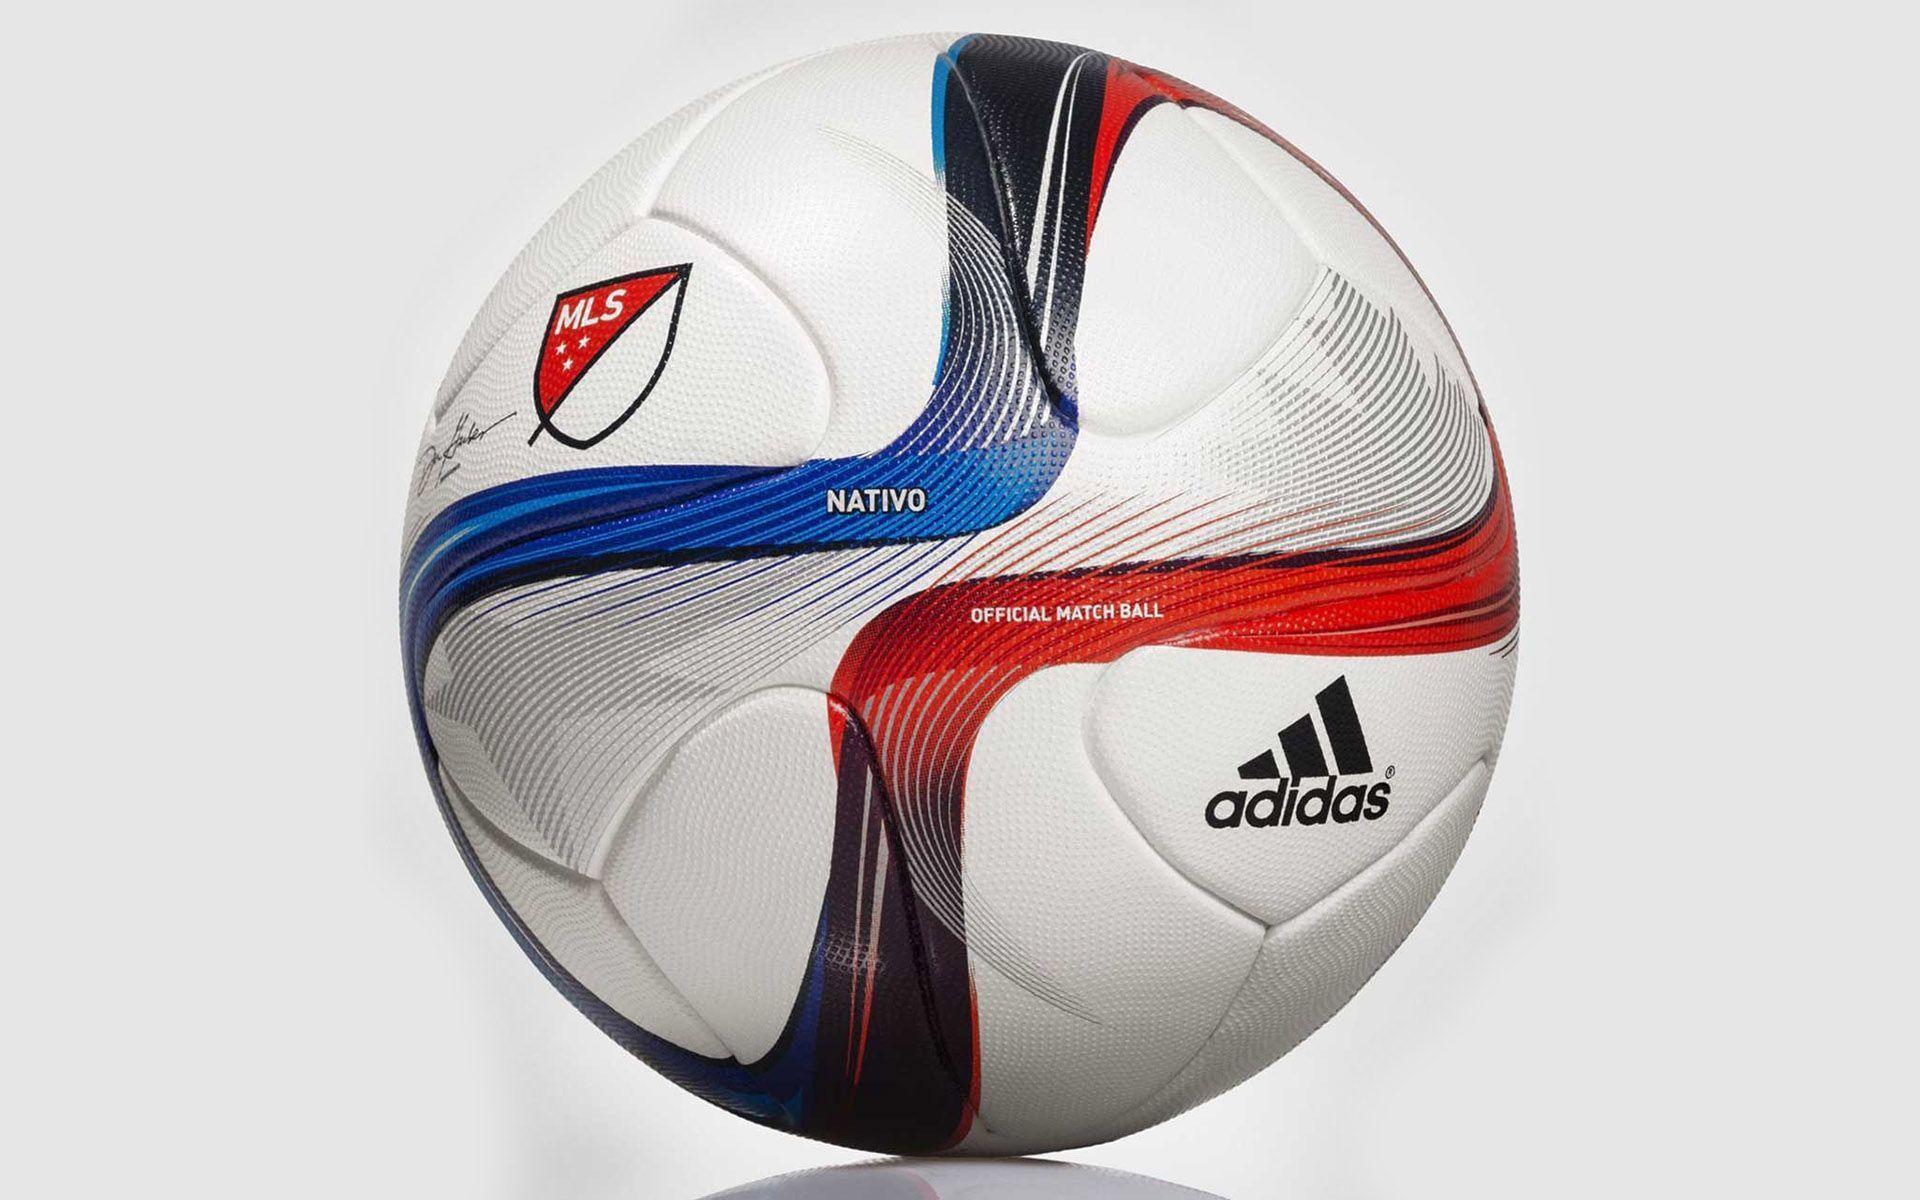 Adidas Nativo 2015 MLS Soccer Ball Wallpaper Wide or HD. Sports